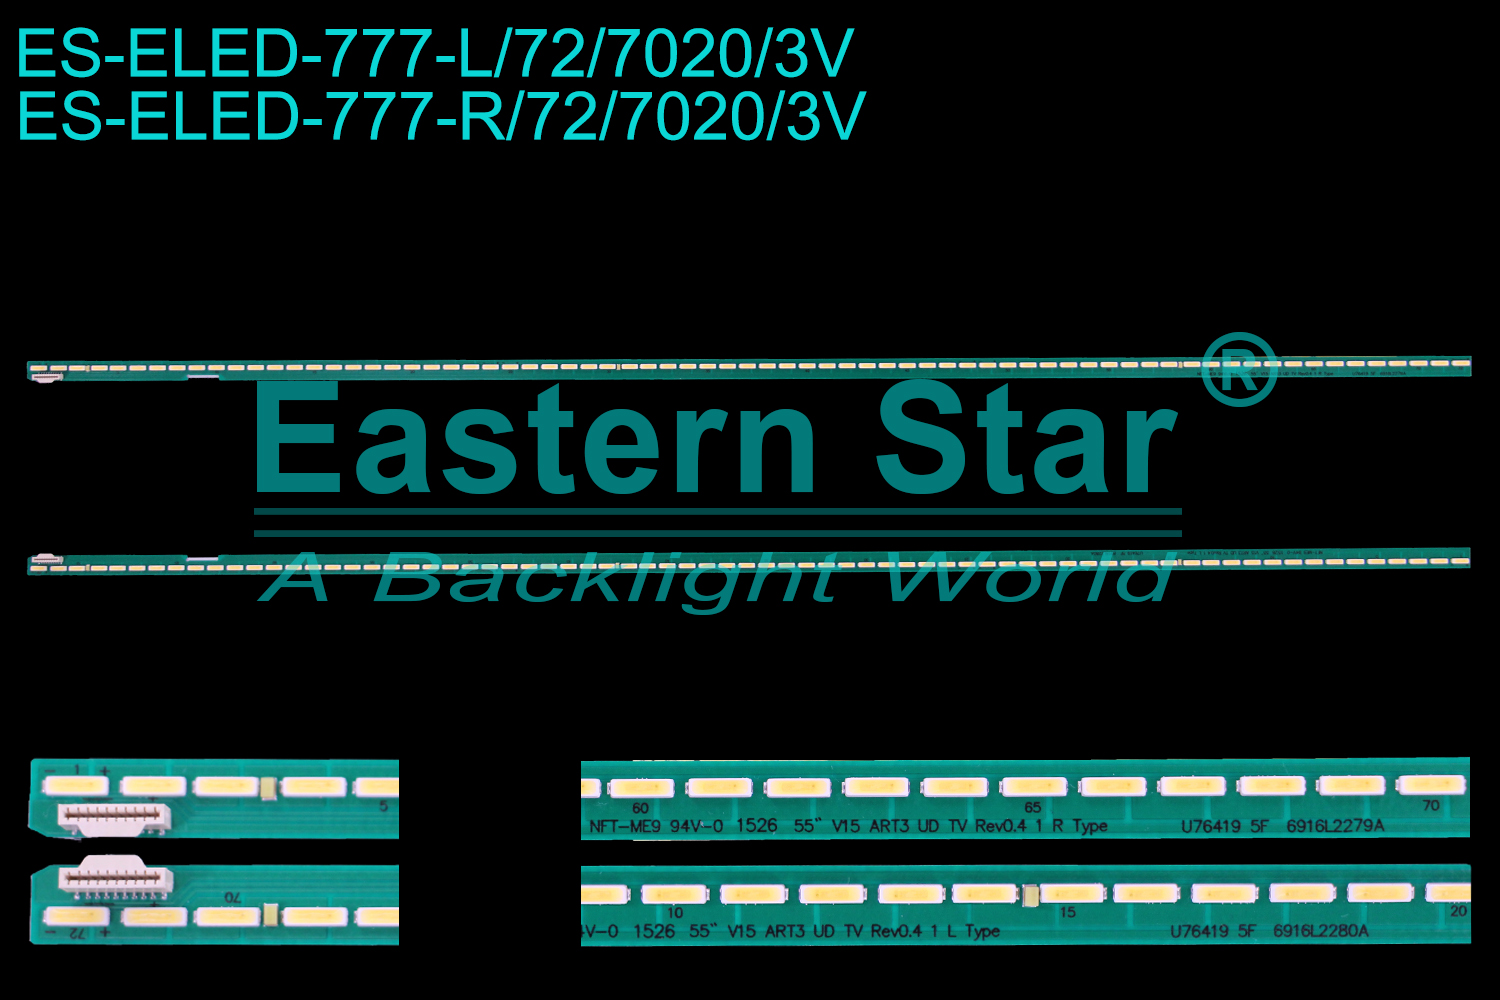 ES-ELED-777 ELED/EDGE TV backlight use for 55'' Lg  LG55UF6800-cA L:55" V15 ART3 UD TV Rev0.4 1 L Type U76419 5F 6916L2280A  R:55" V15 ART3 UD TV Rev0.4 1 R Type U76419 5F 6916L2279A LED STRIPS(2)